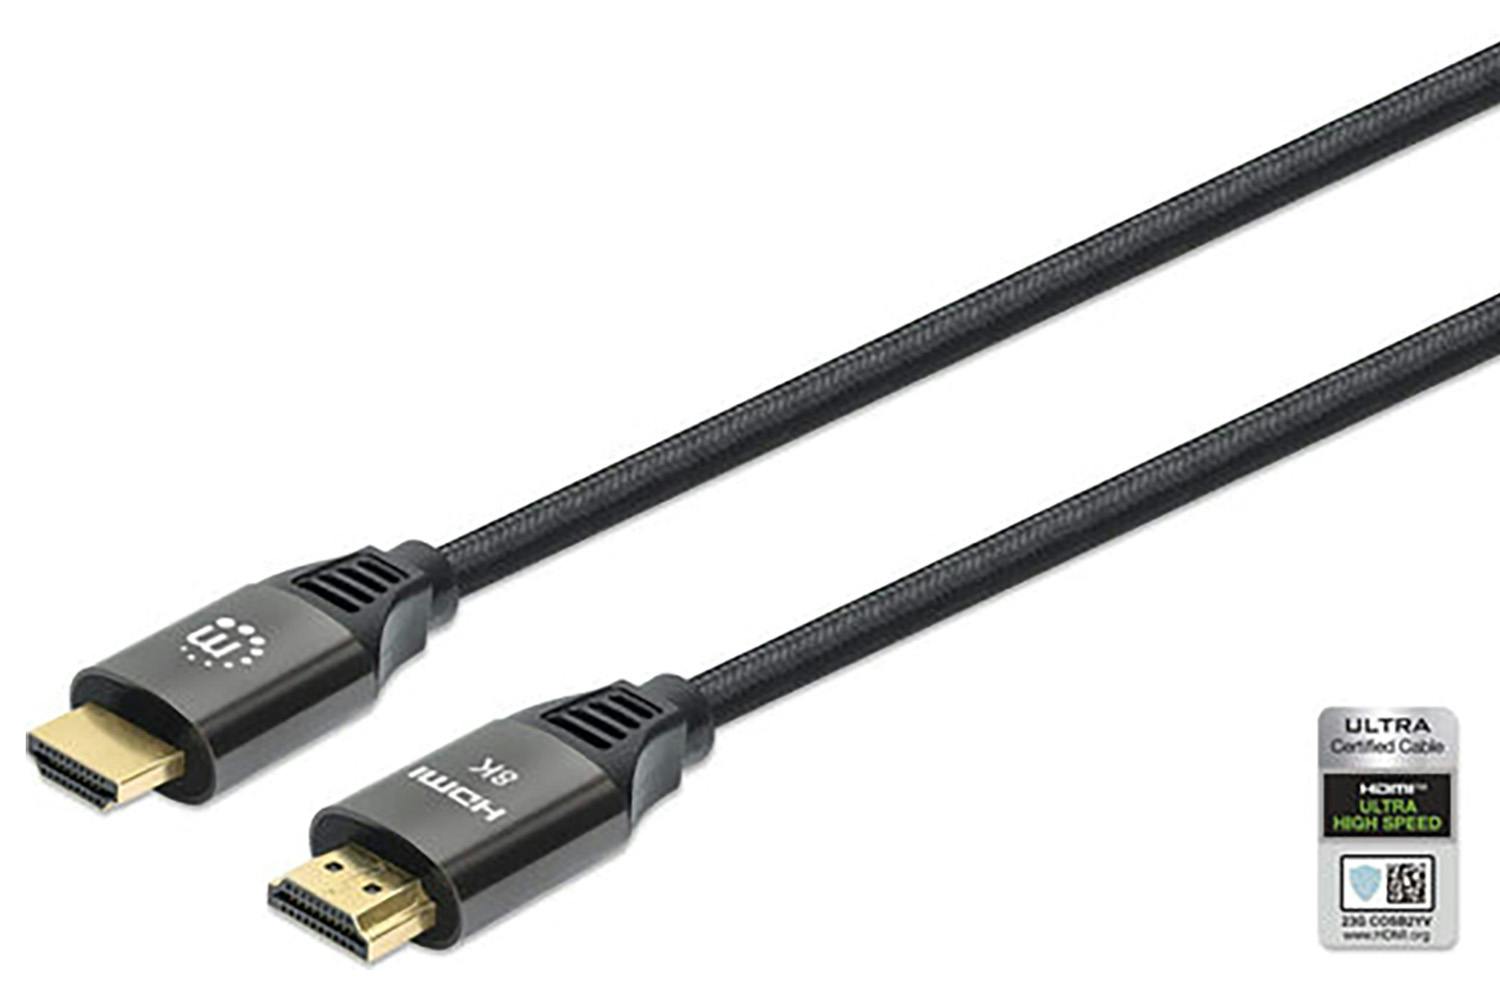 Câble HDMI 2.1 Ultra High Speed 8K M/M